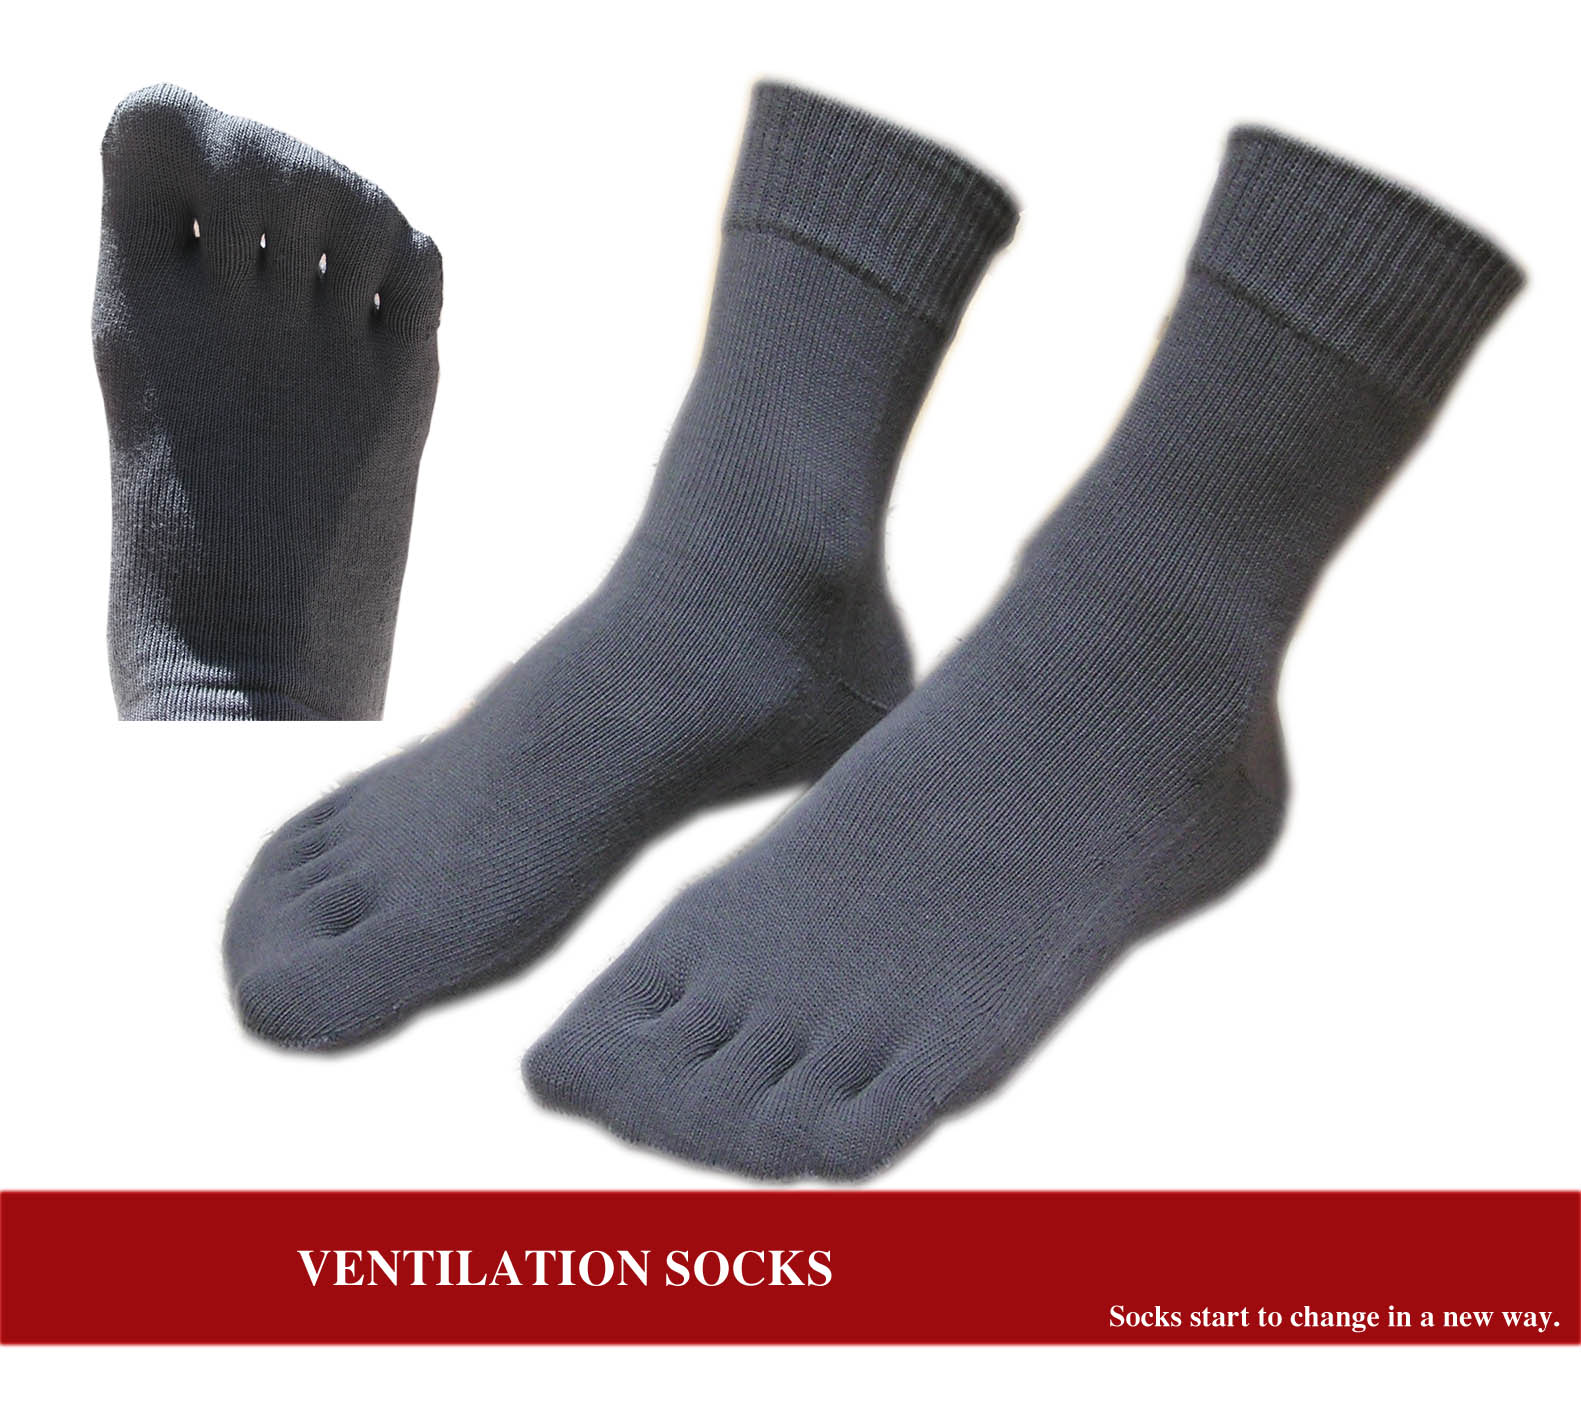 Ventilation socks